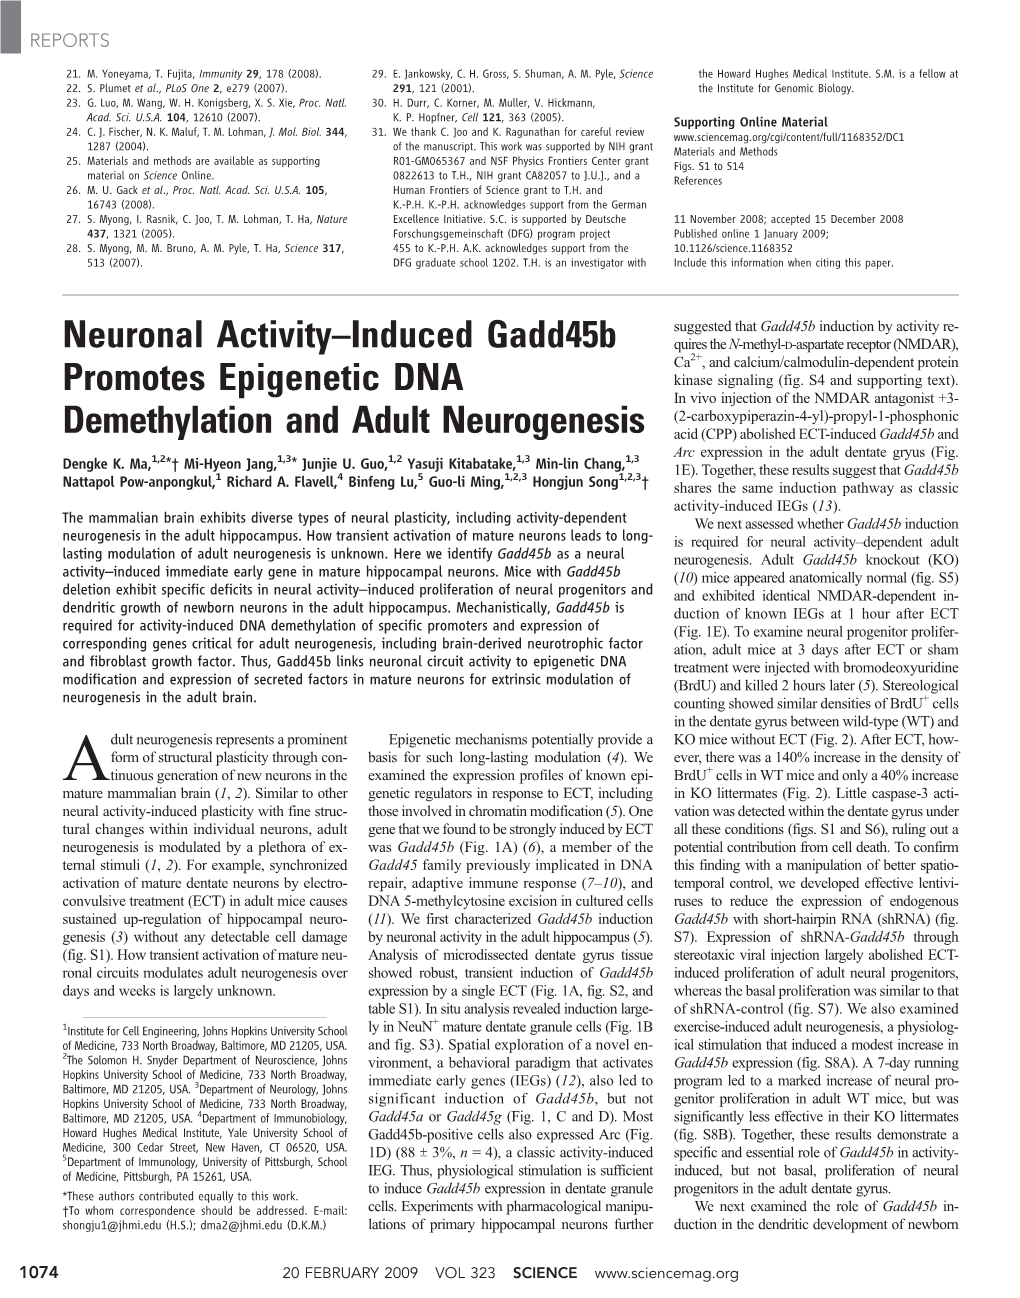 Neuronal Activity–Induced Gadd45b Promotes Epigenetic DNA